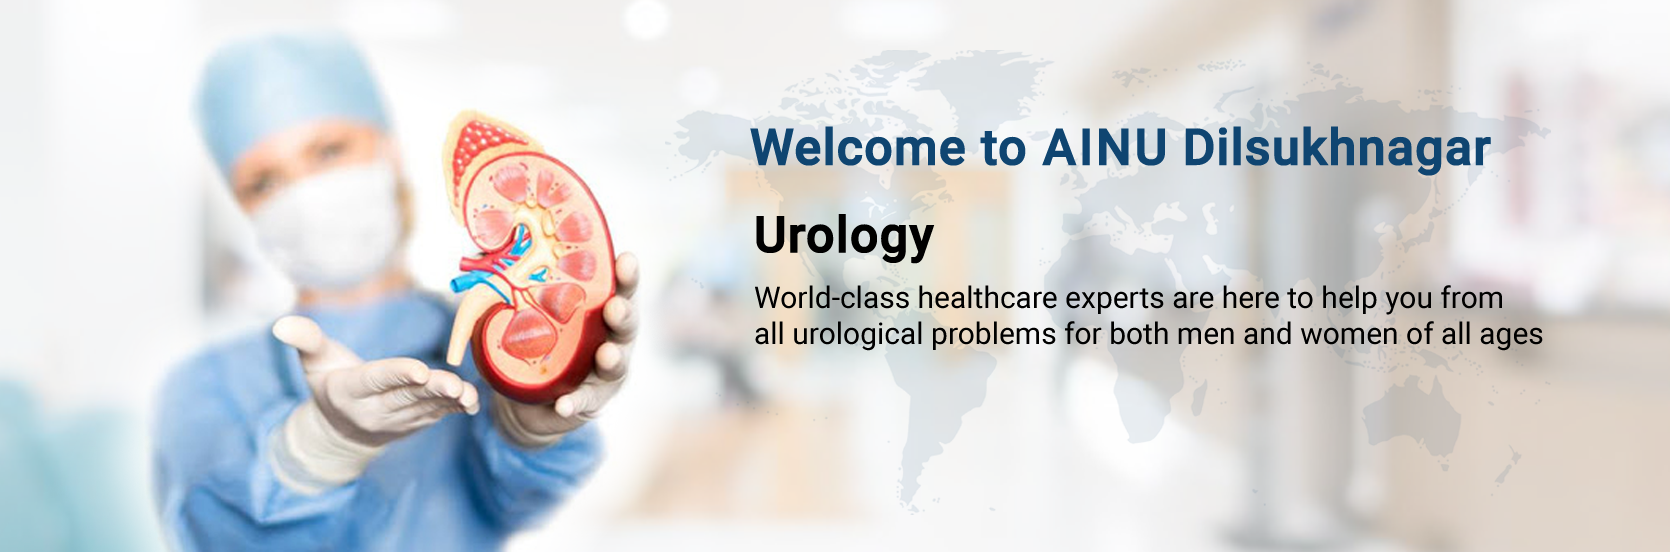 AINU Dilsukhnagar urology banner